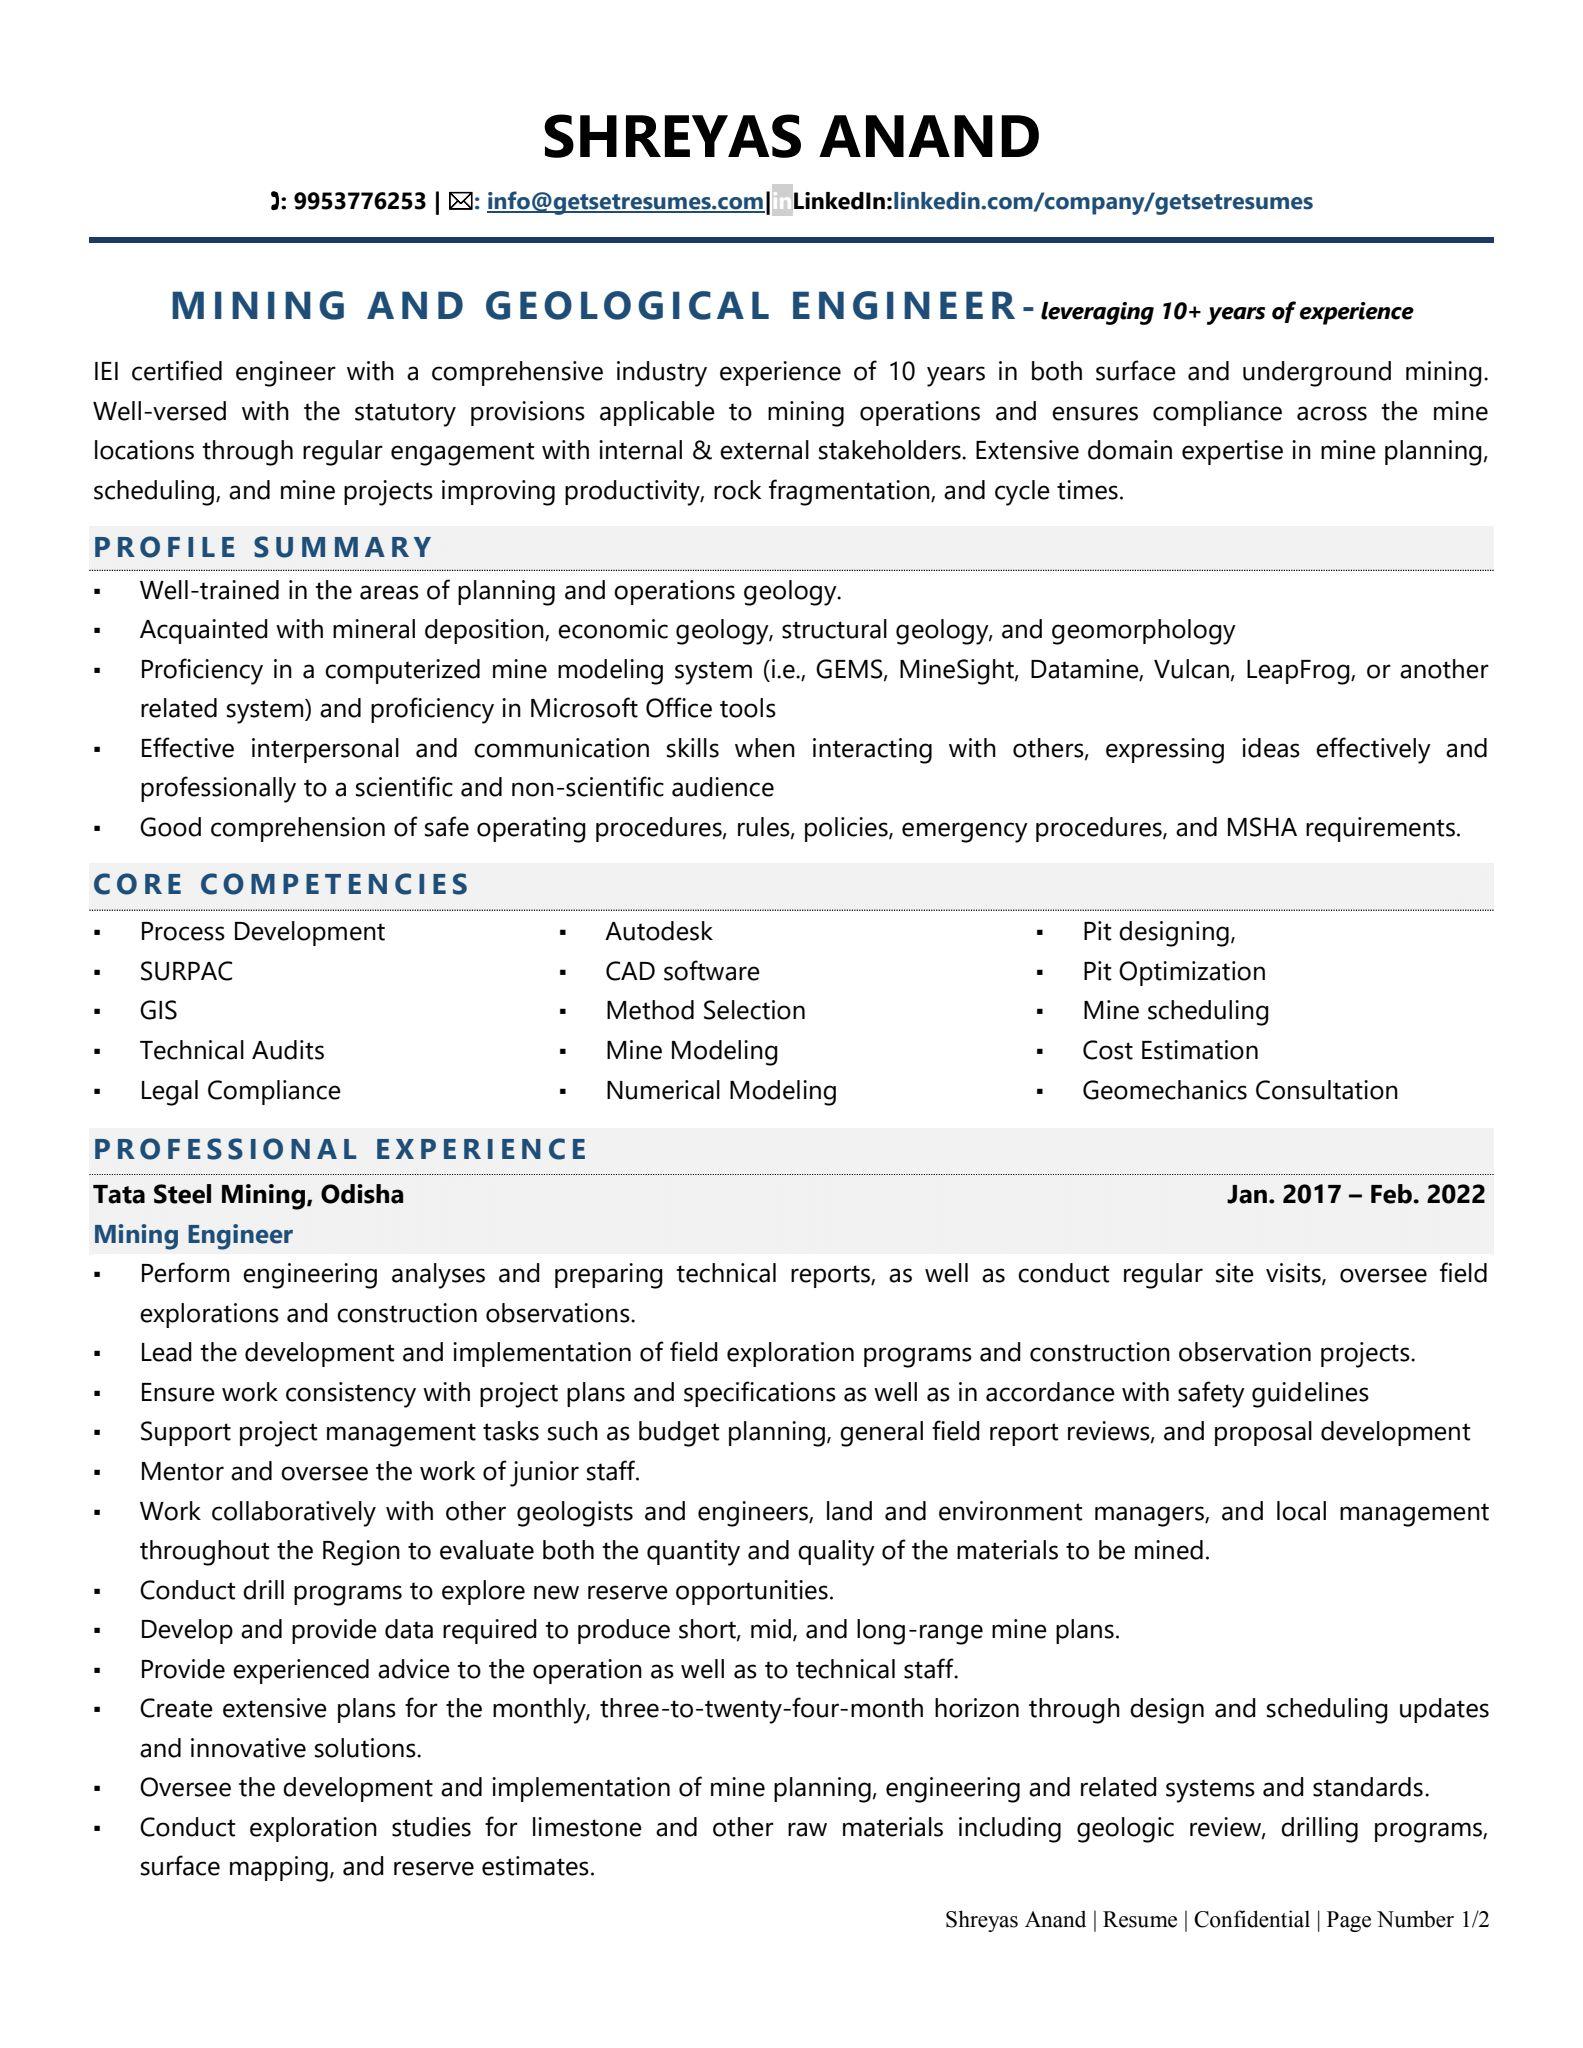 Mining & Geological Engineer - Resume Example & Template